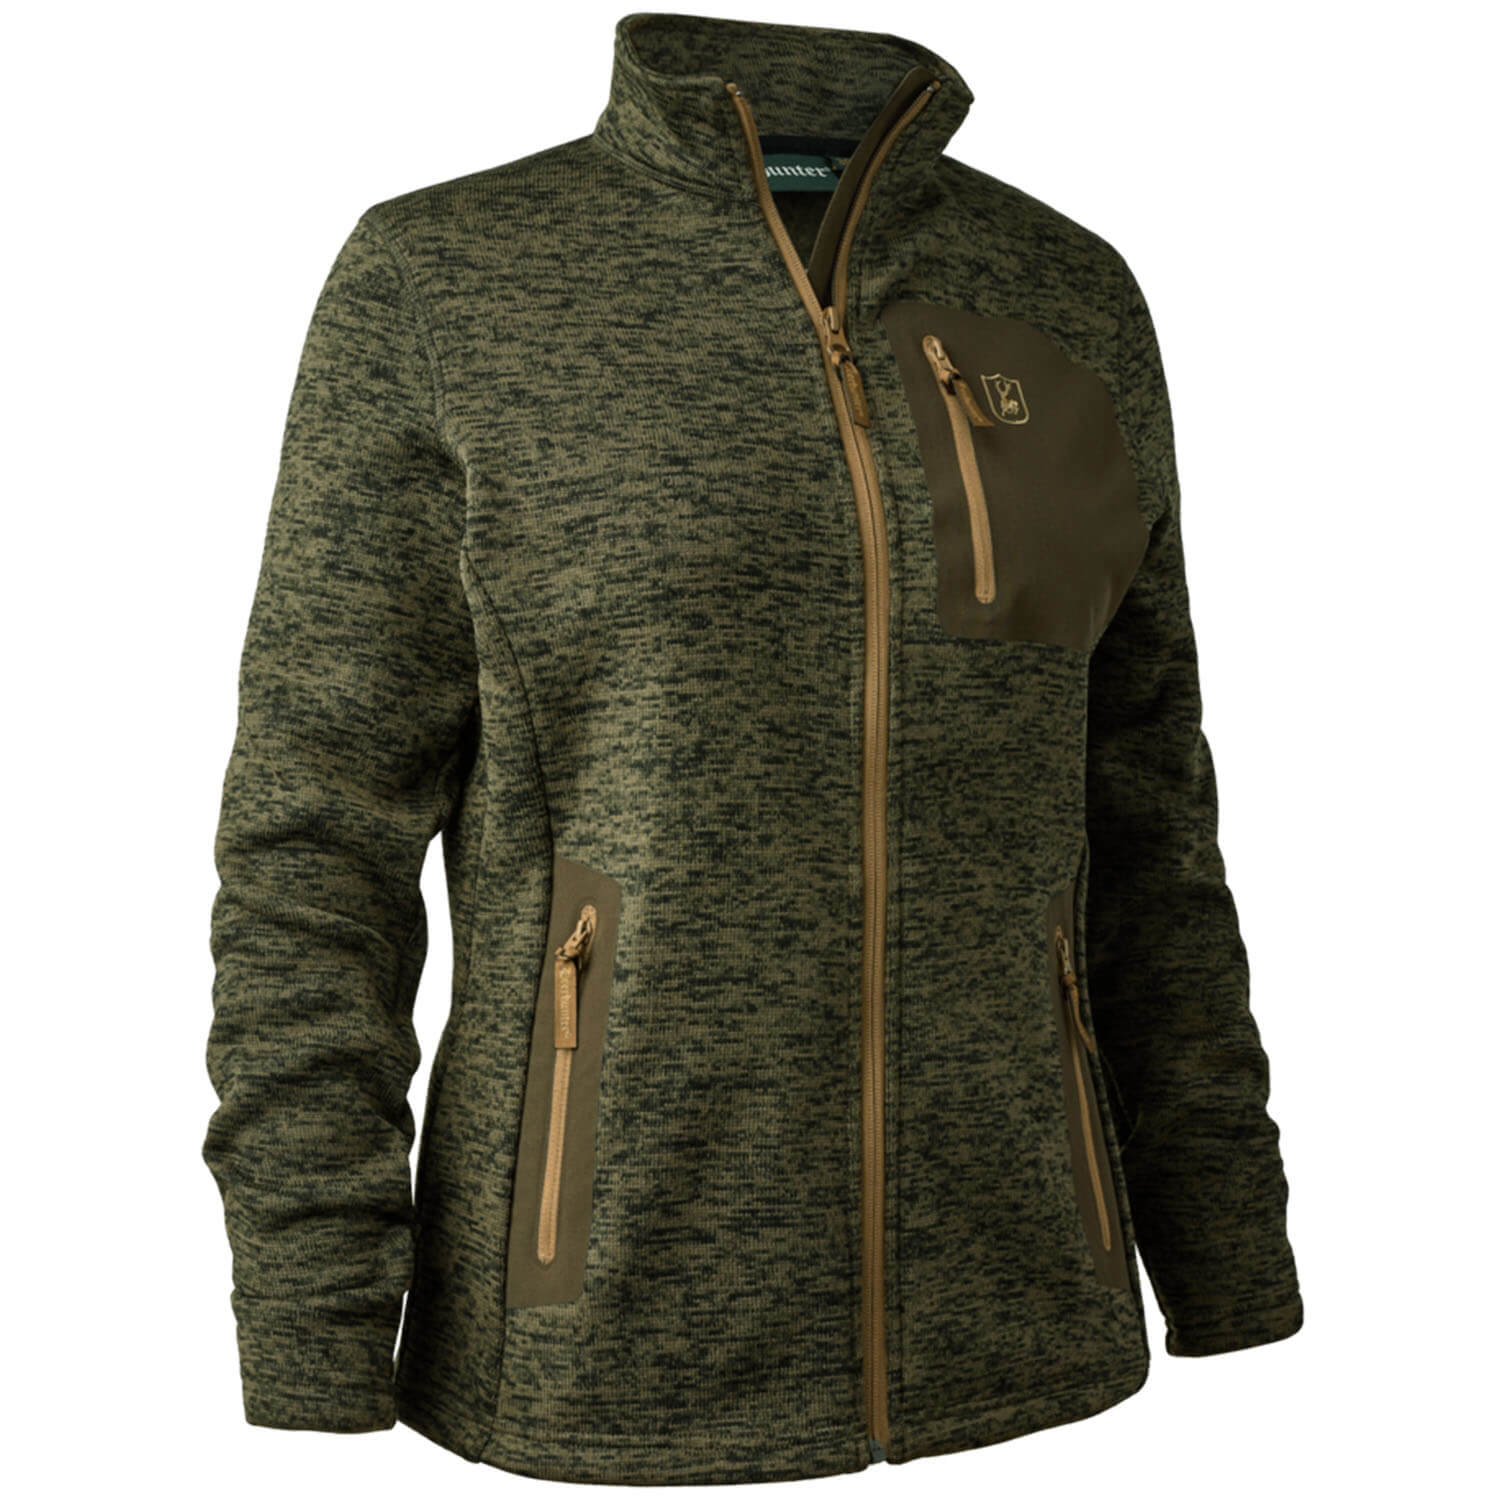 Deerhunter knitt fleece jacket sarek (olive night melange) - Hunting Jackets